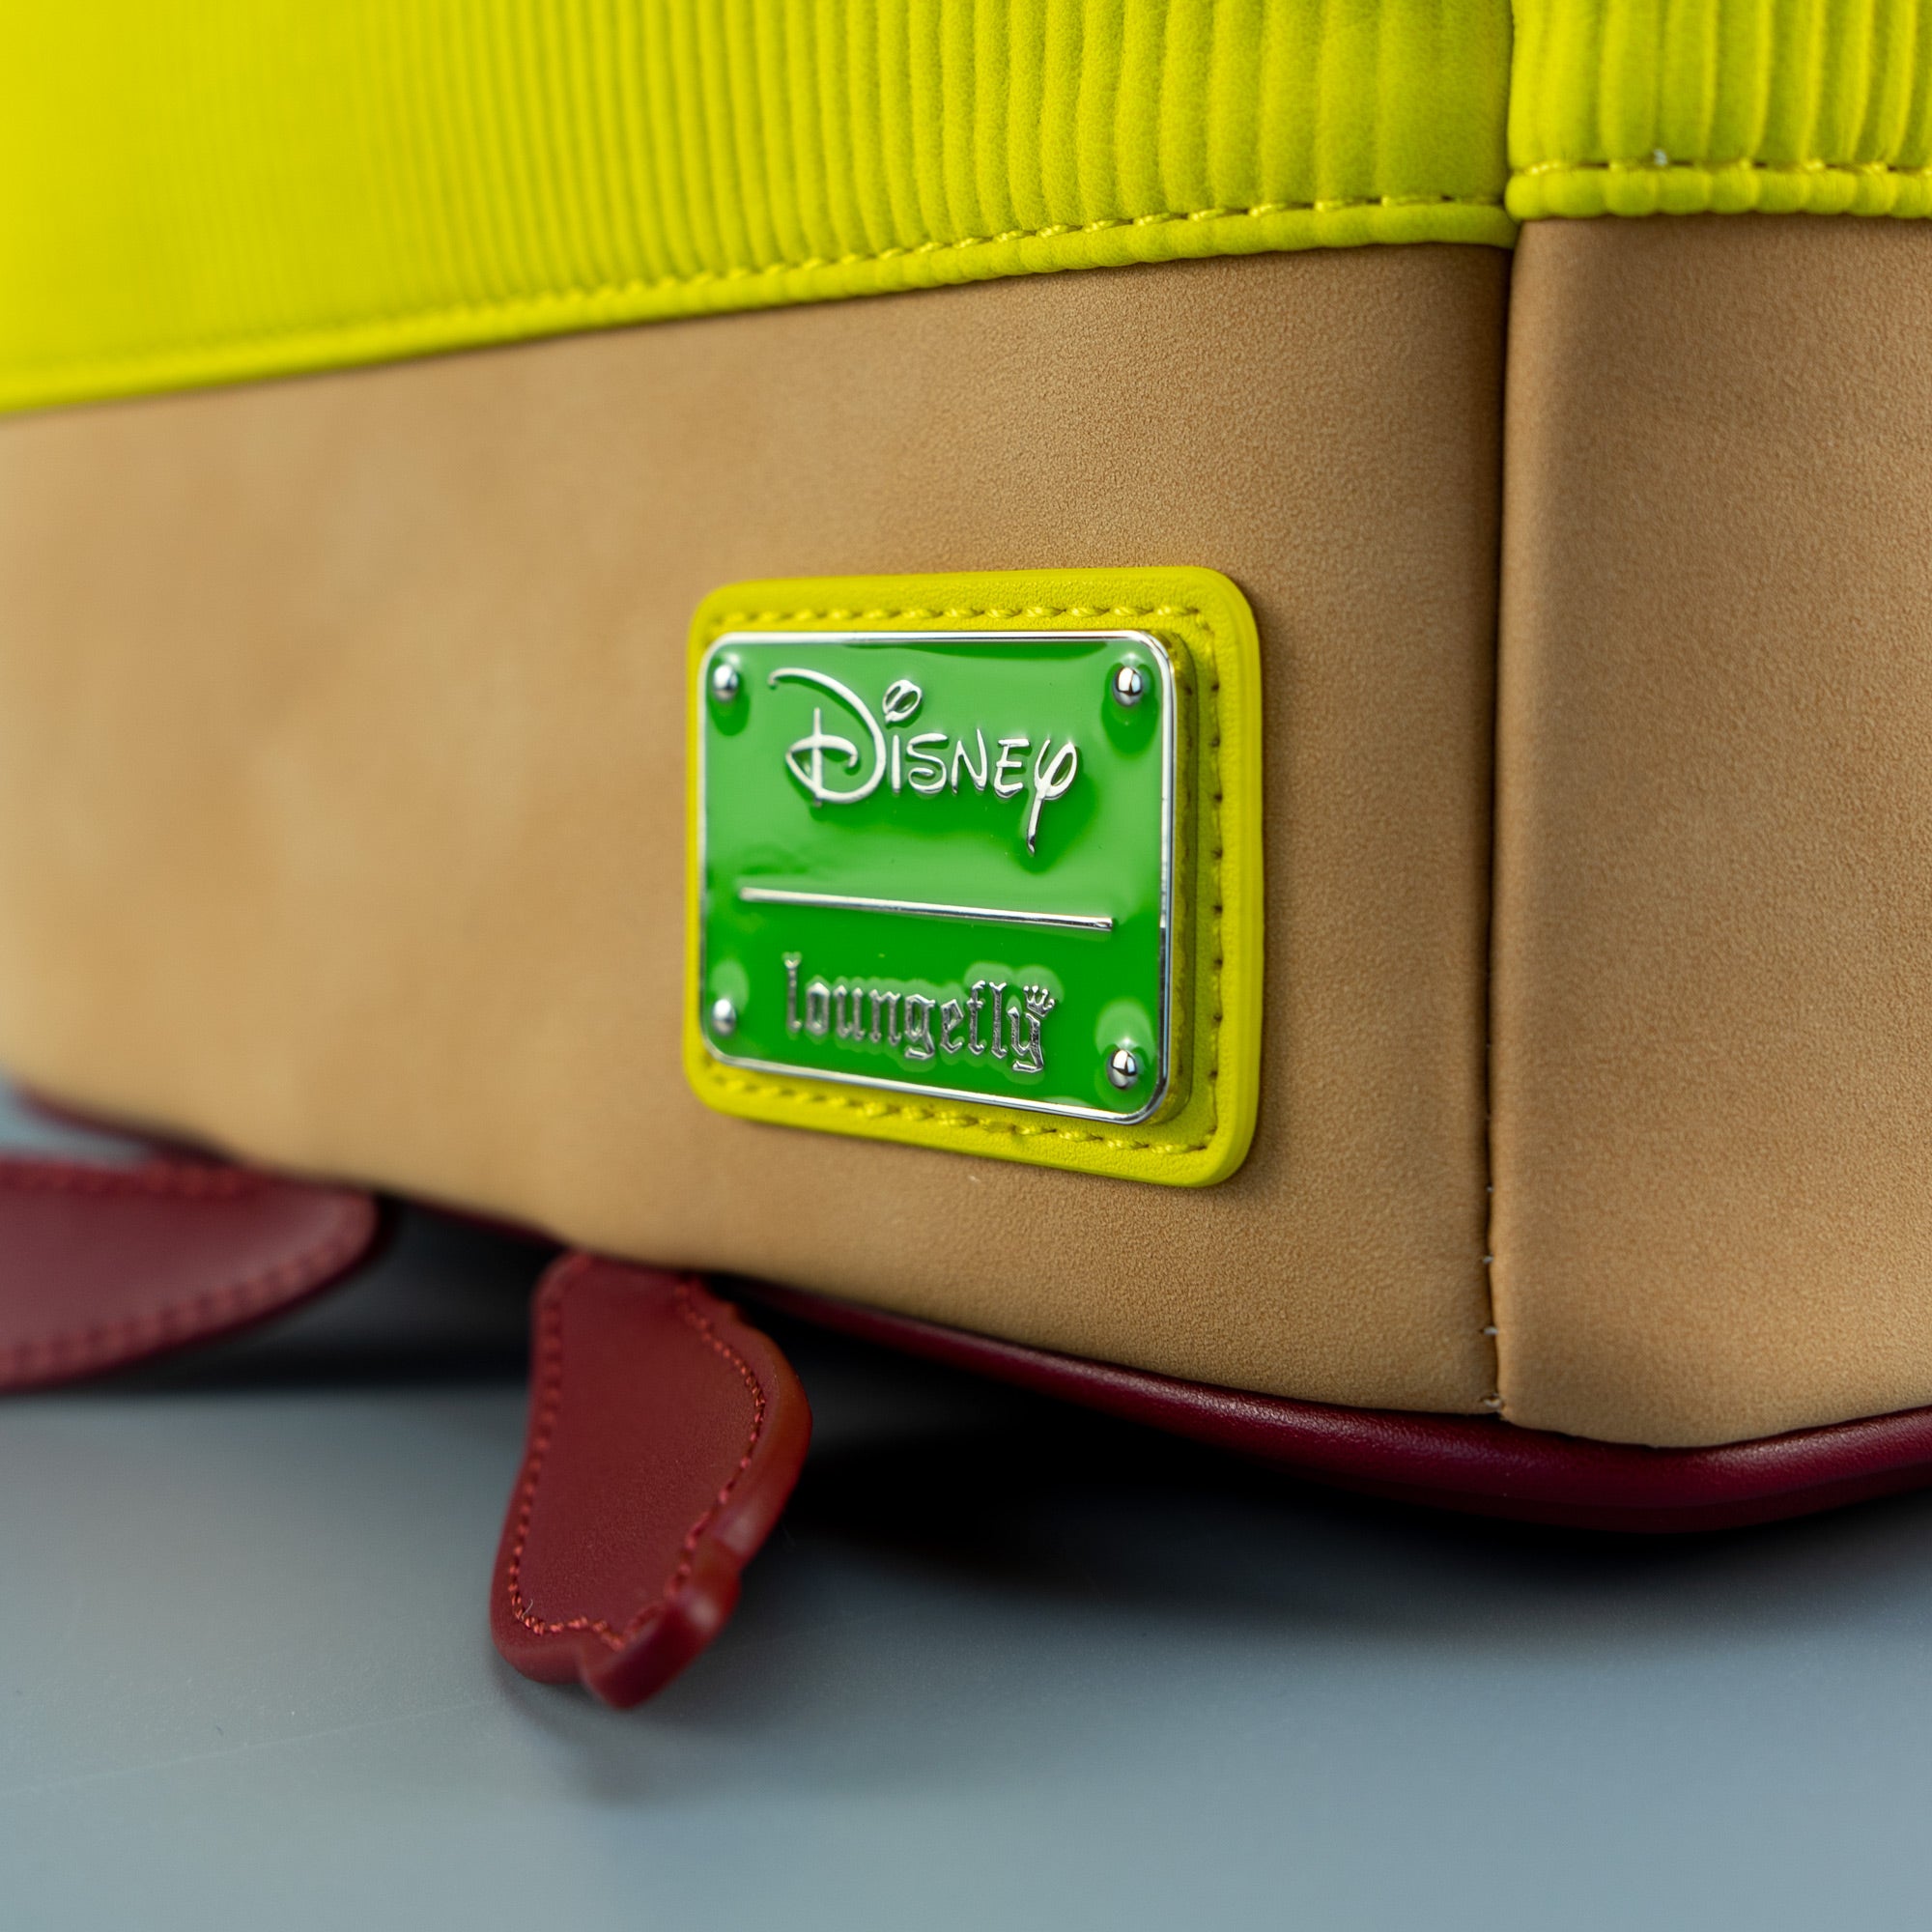 Loungefly x Disney Cinderella Gus Gus Cosplay Mini Backpack